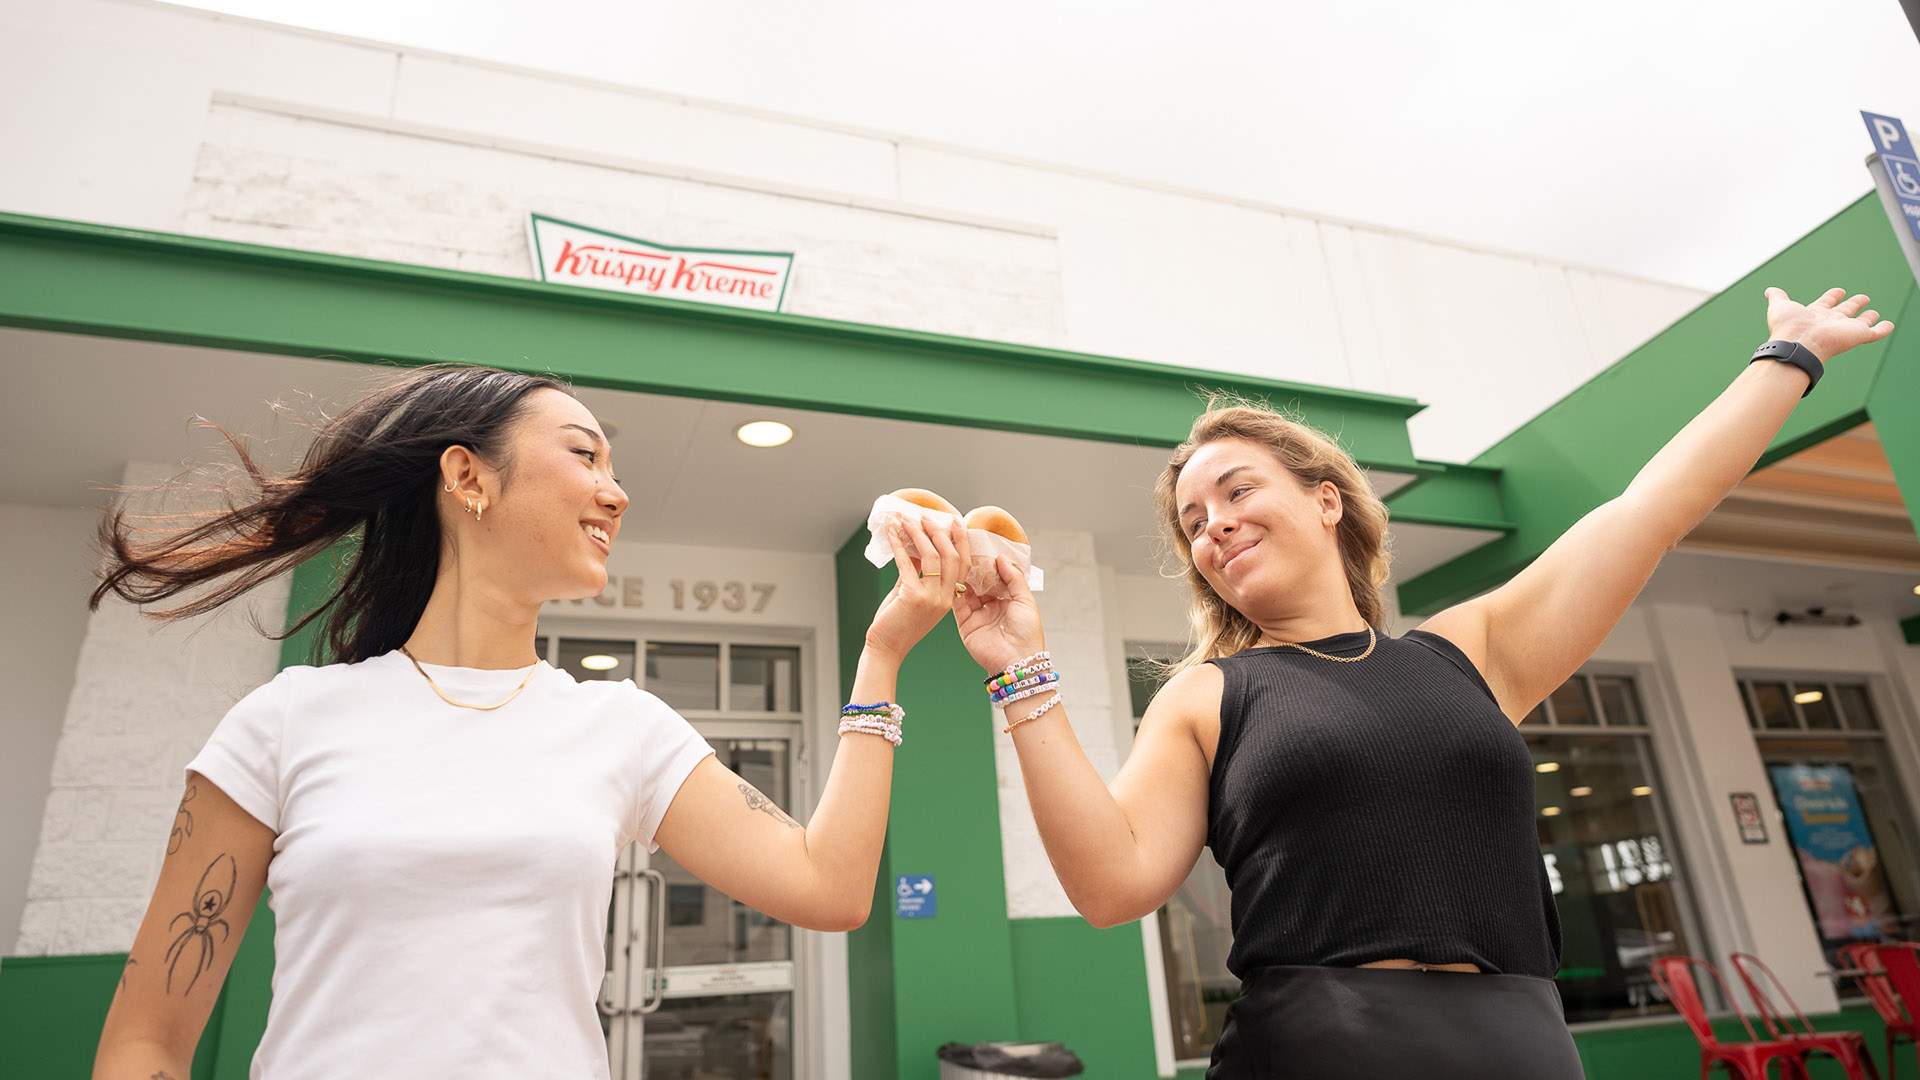 Krispy Kreme doughnuts and friendship bracelets